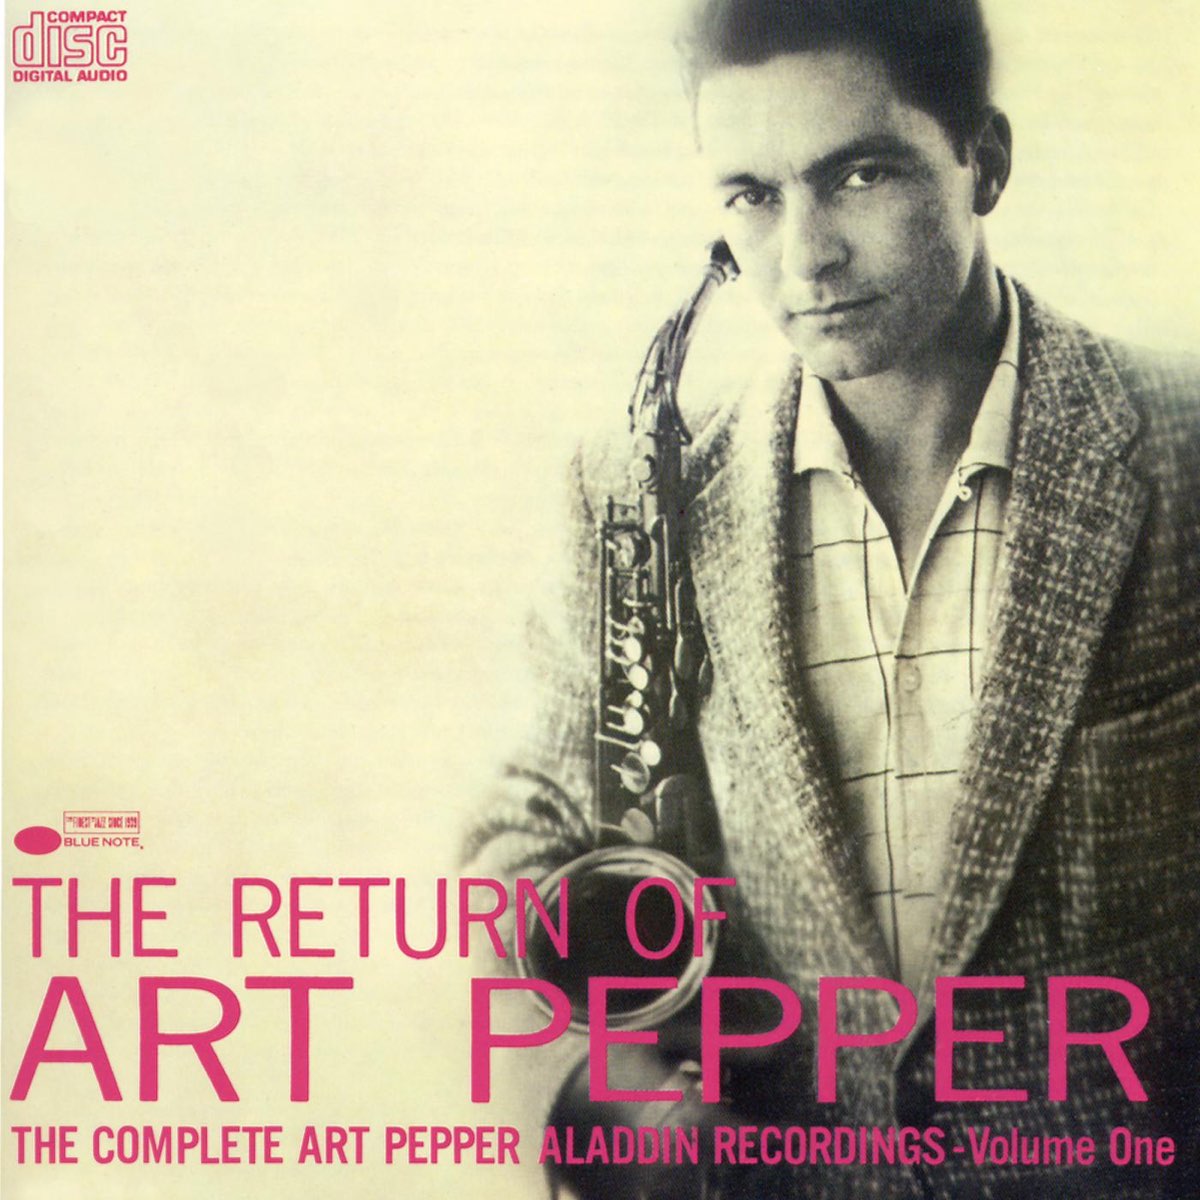 Art pepper. Pepper Art. Pepe Art. Art Pepper 1957. Art Pepper complete Galaxy recordings.